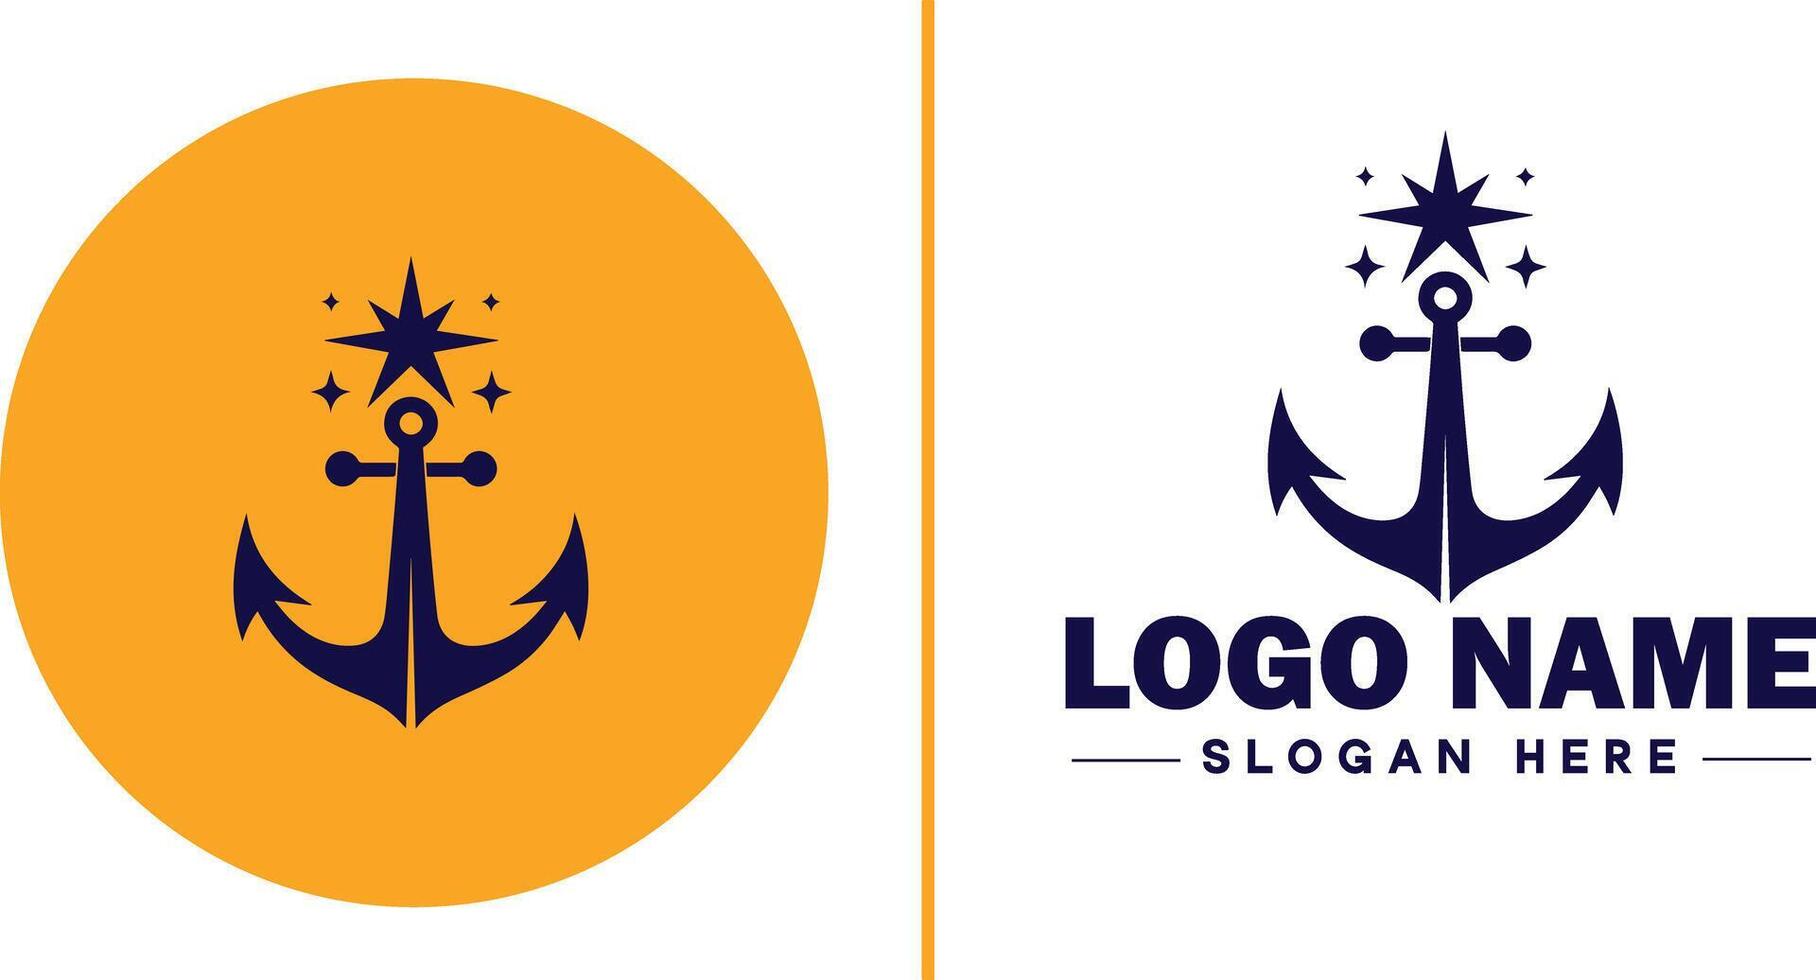 ancla logo icono vector para Embarcacion yate lujo marina ancla icono logo modelo